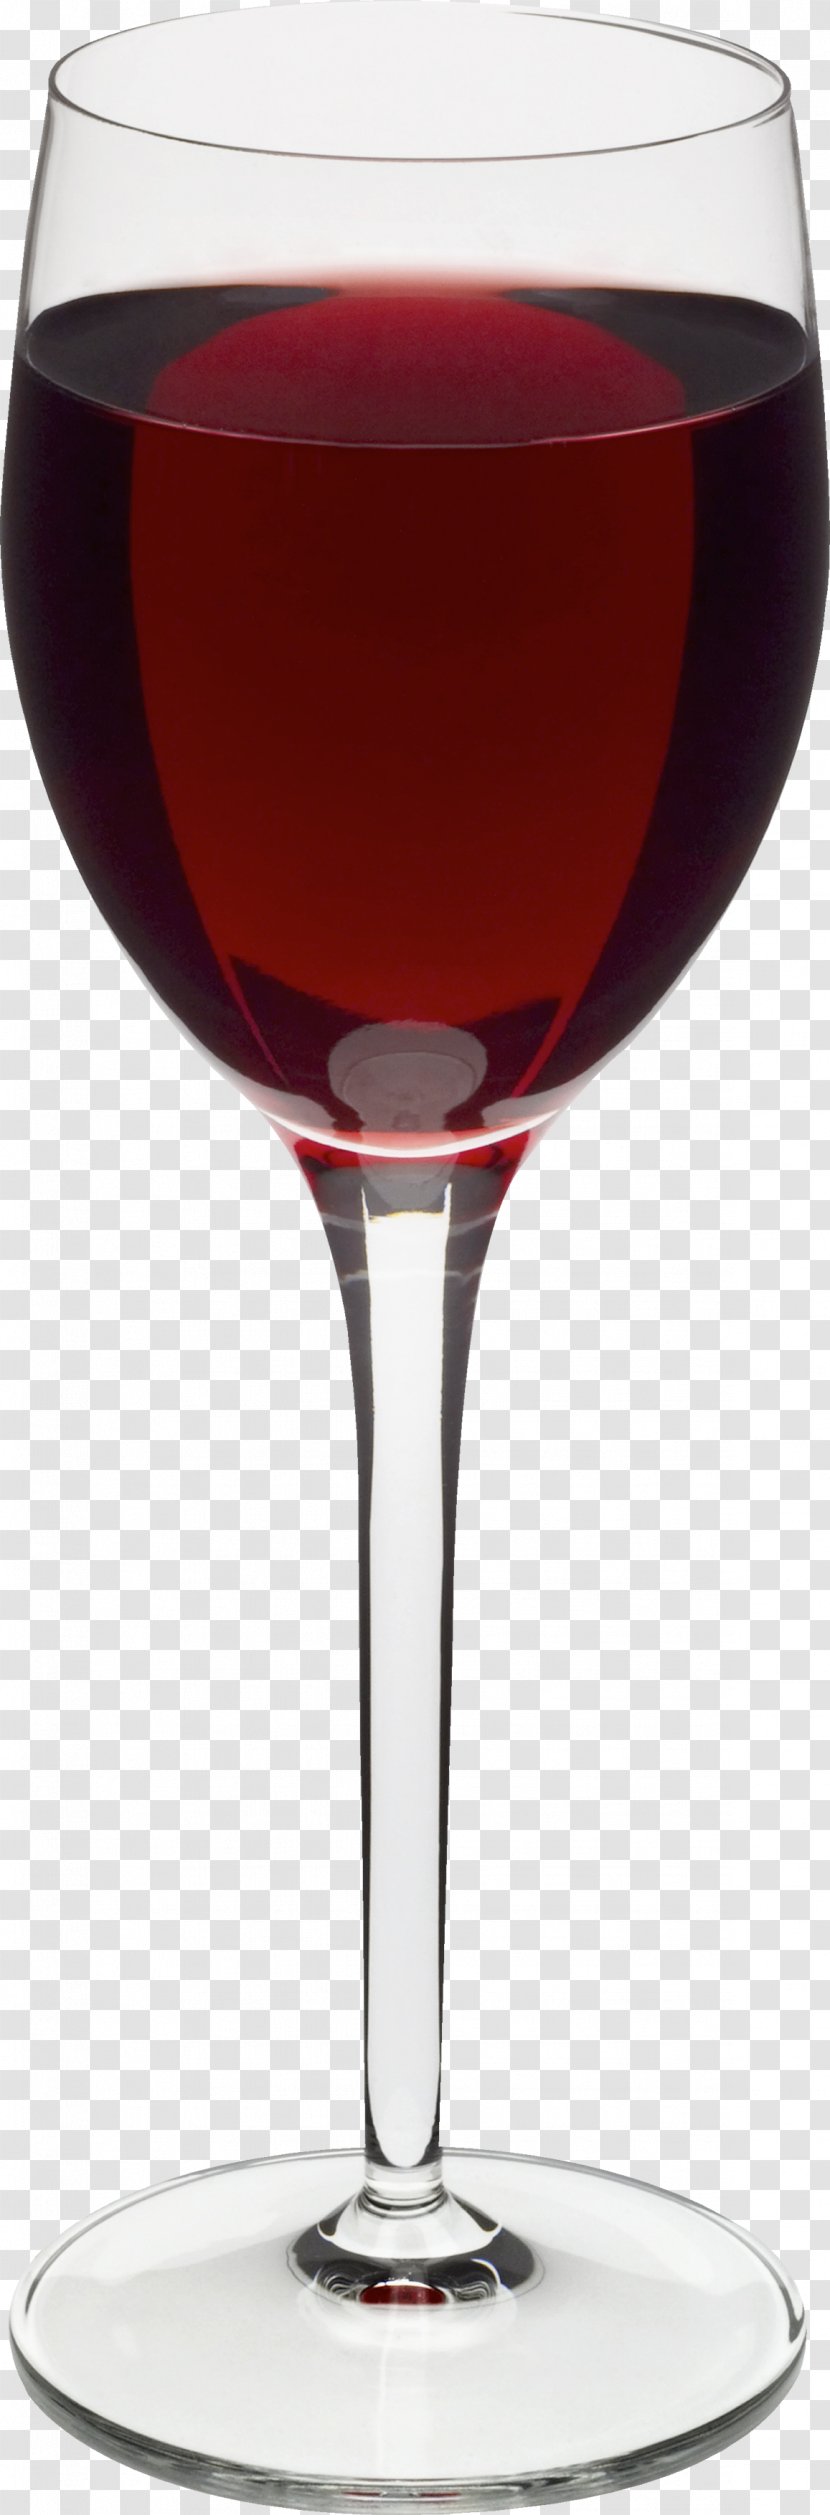 Wine Glass Computer File - Drink - Image Transparent PNG